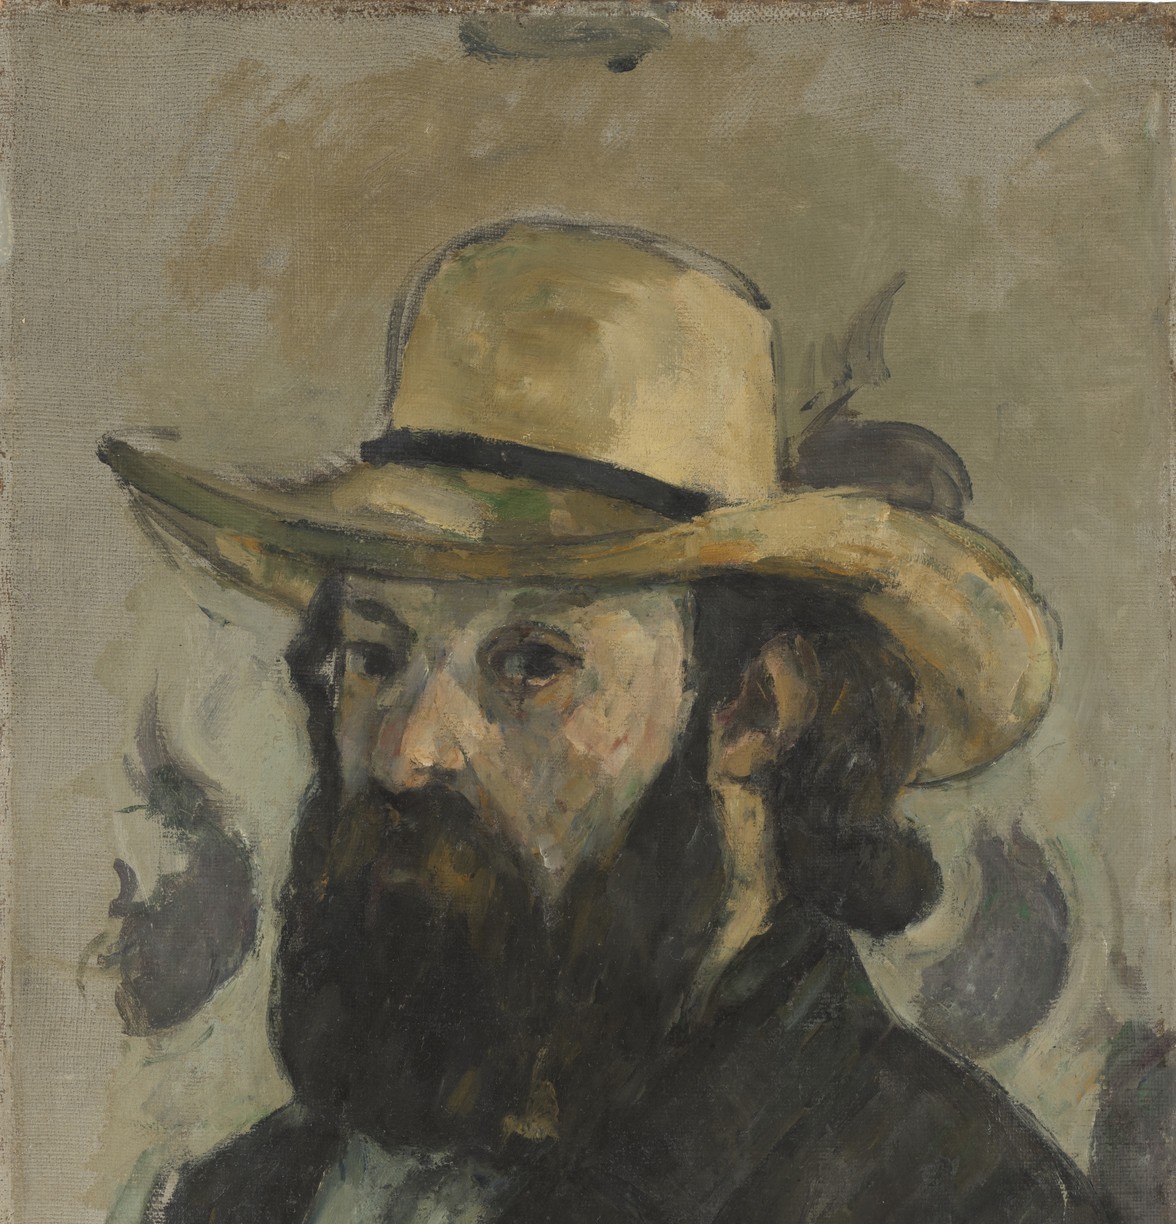 Cézanne’s maxims